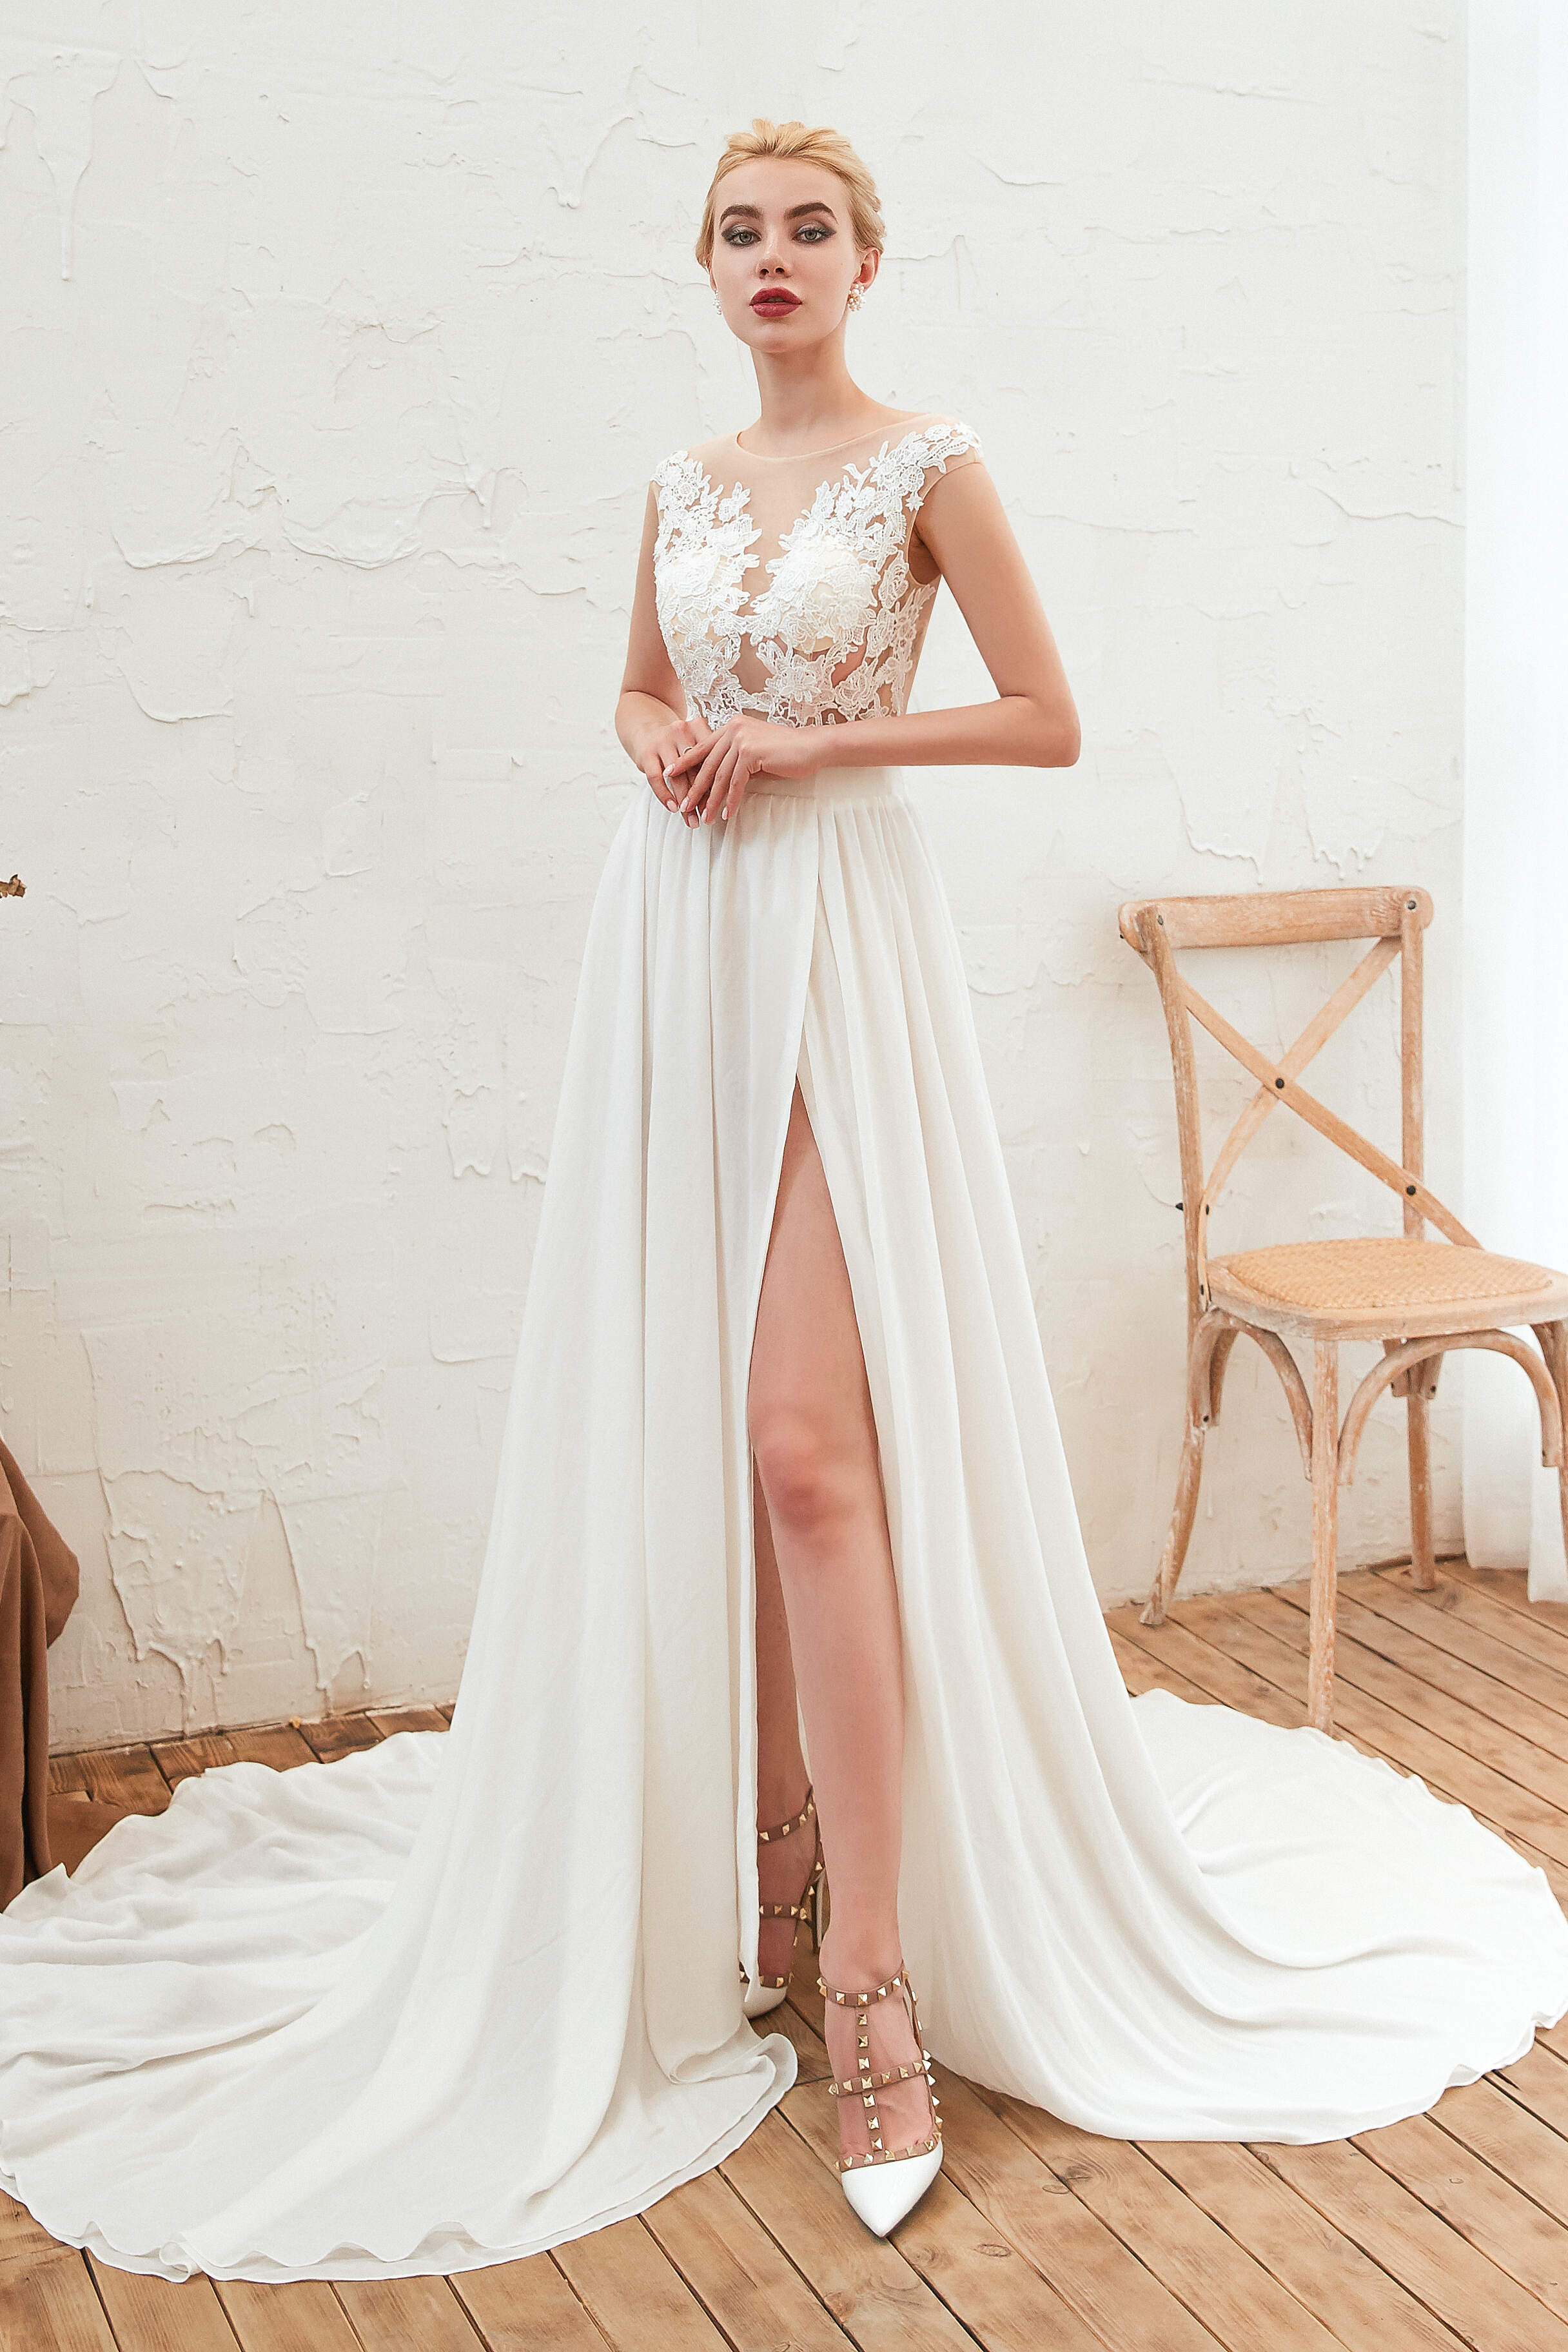 Wedsing Dress Vintage, Neck Lace Top White Wedding Dresses with Slit